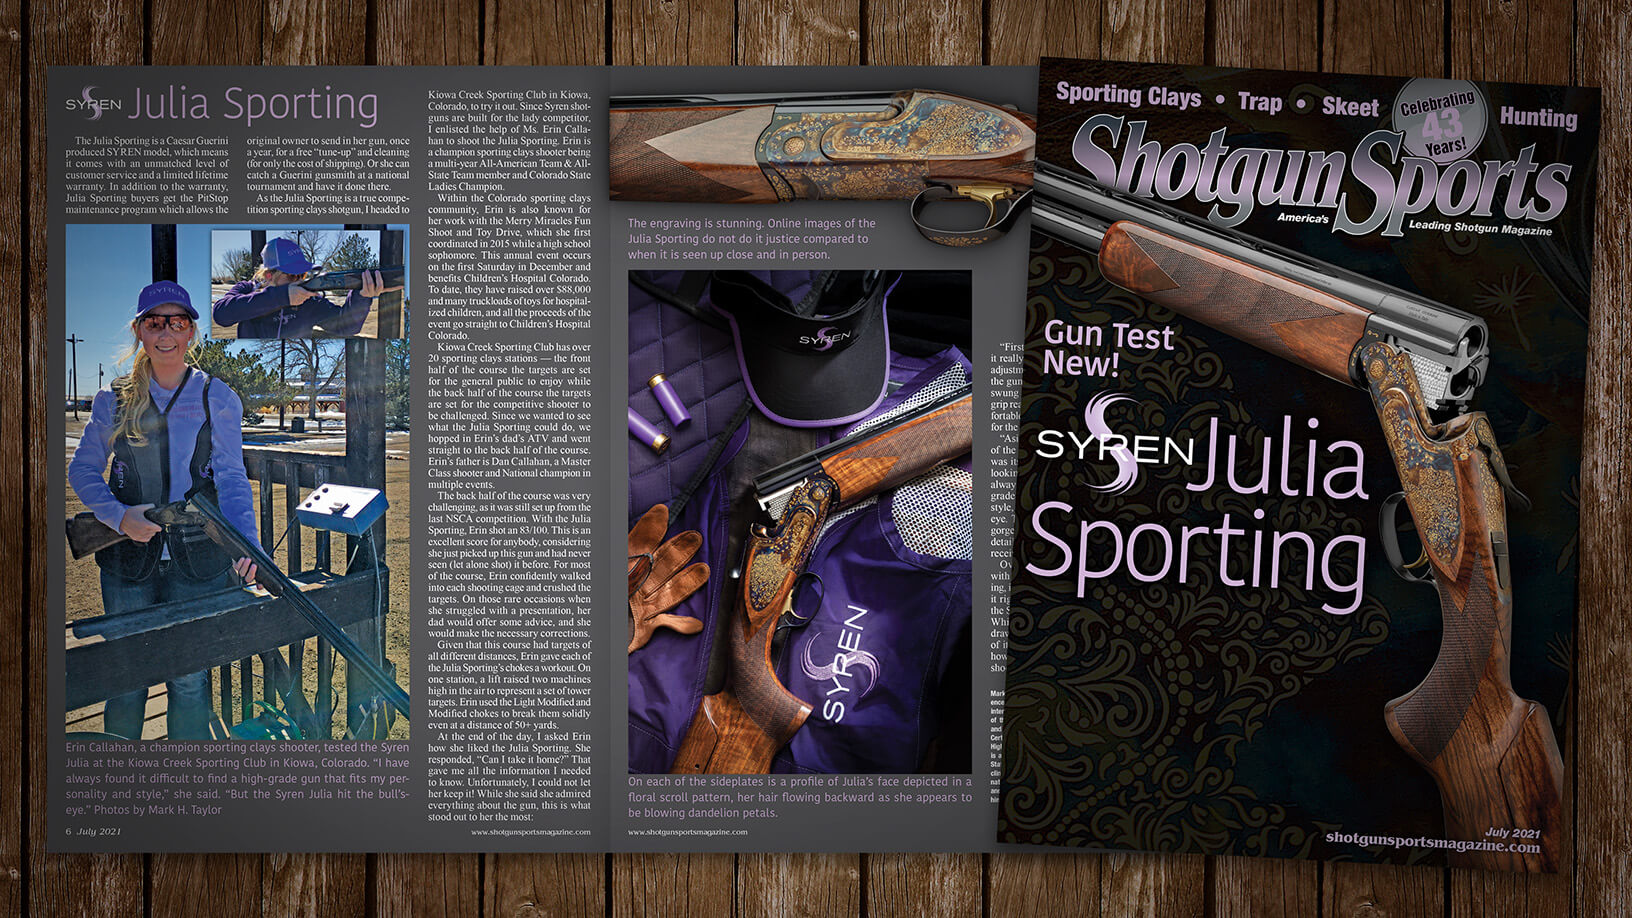 [Shotgun Sports] Gun Test: Syren Julia Sporting